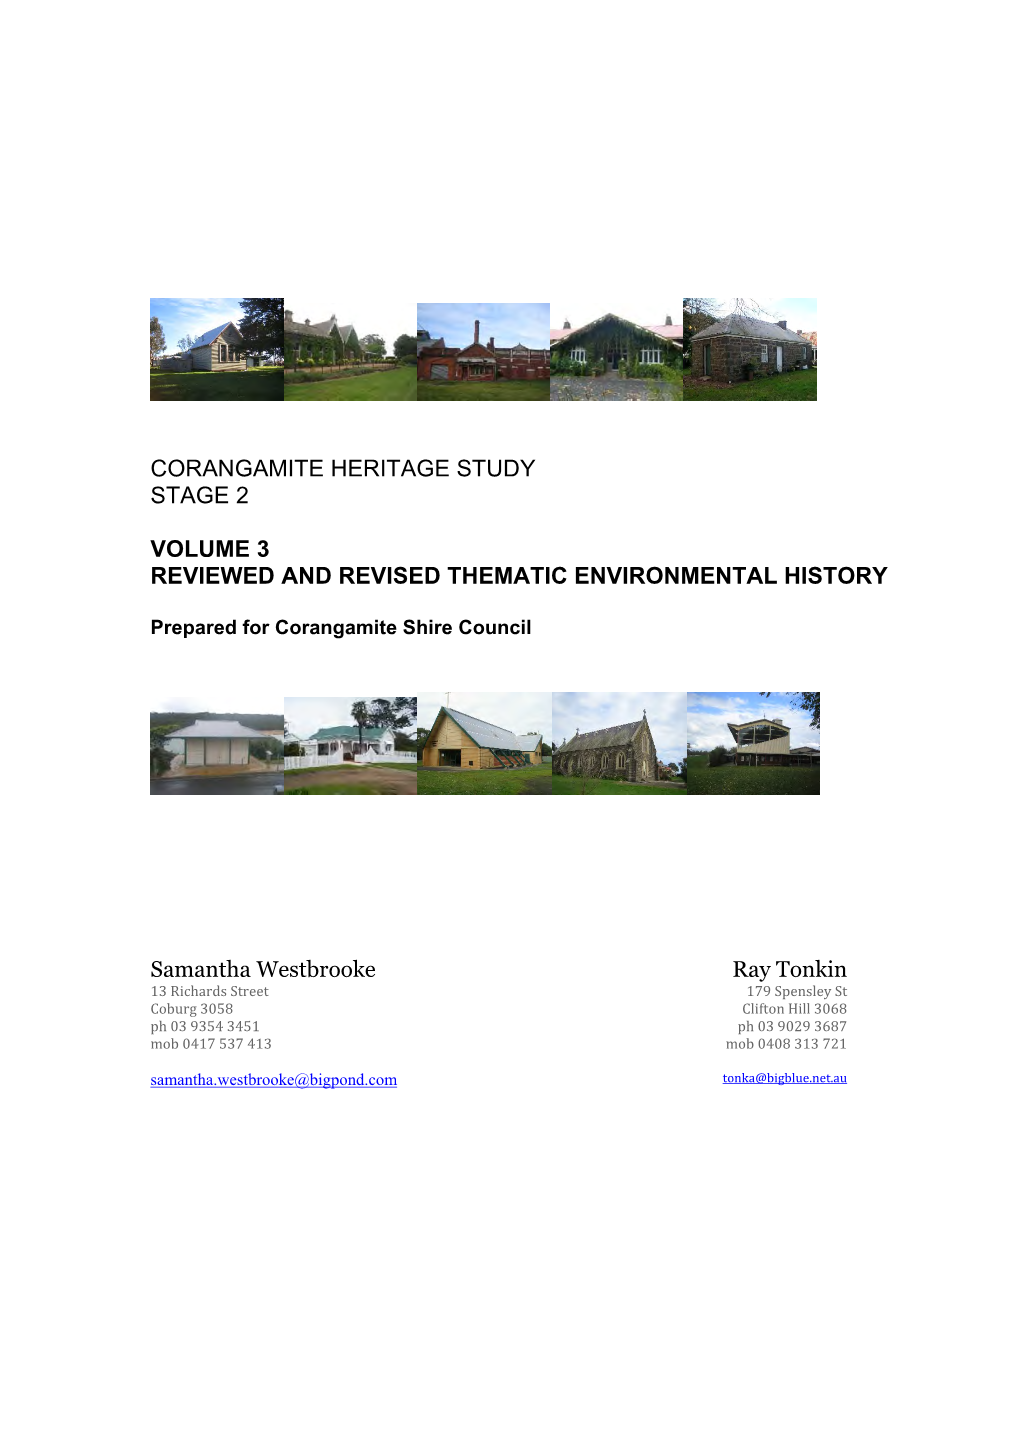 Corangamite Heritage Study Stage 2 Volume 3 Reviewed